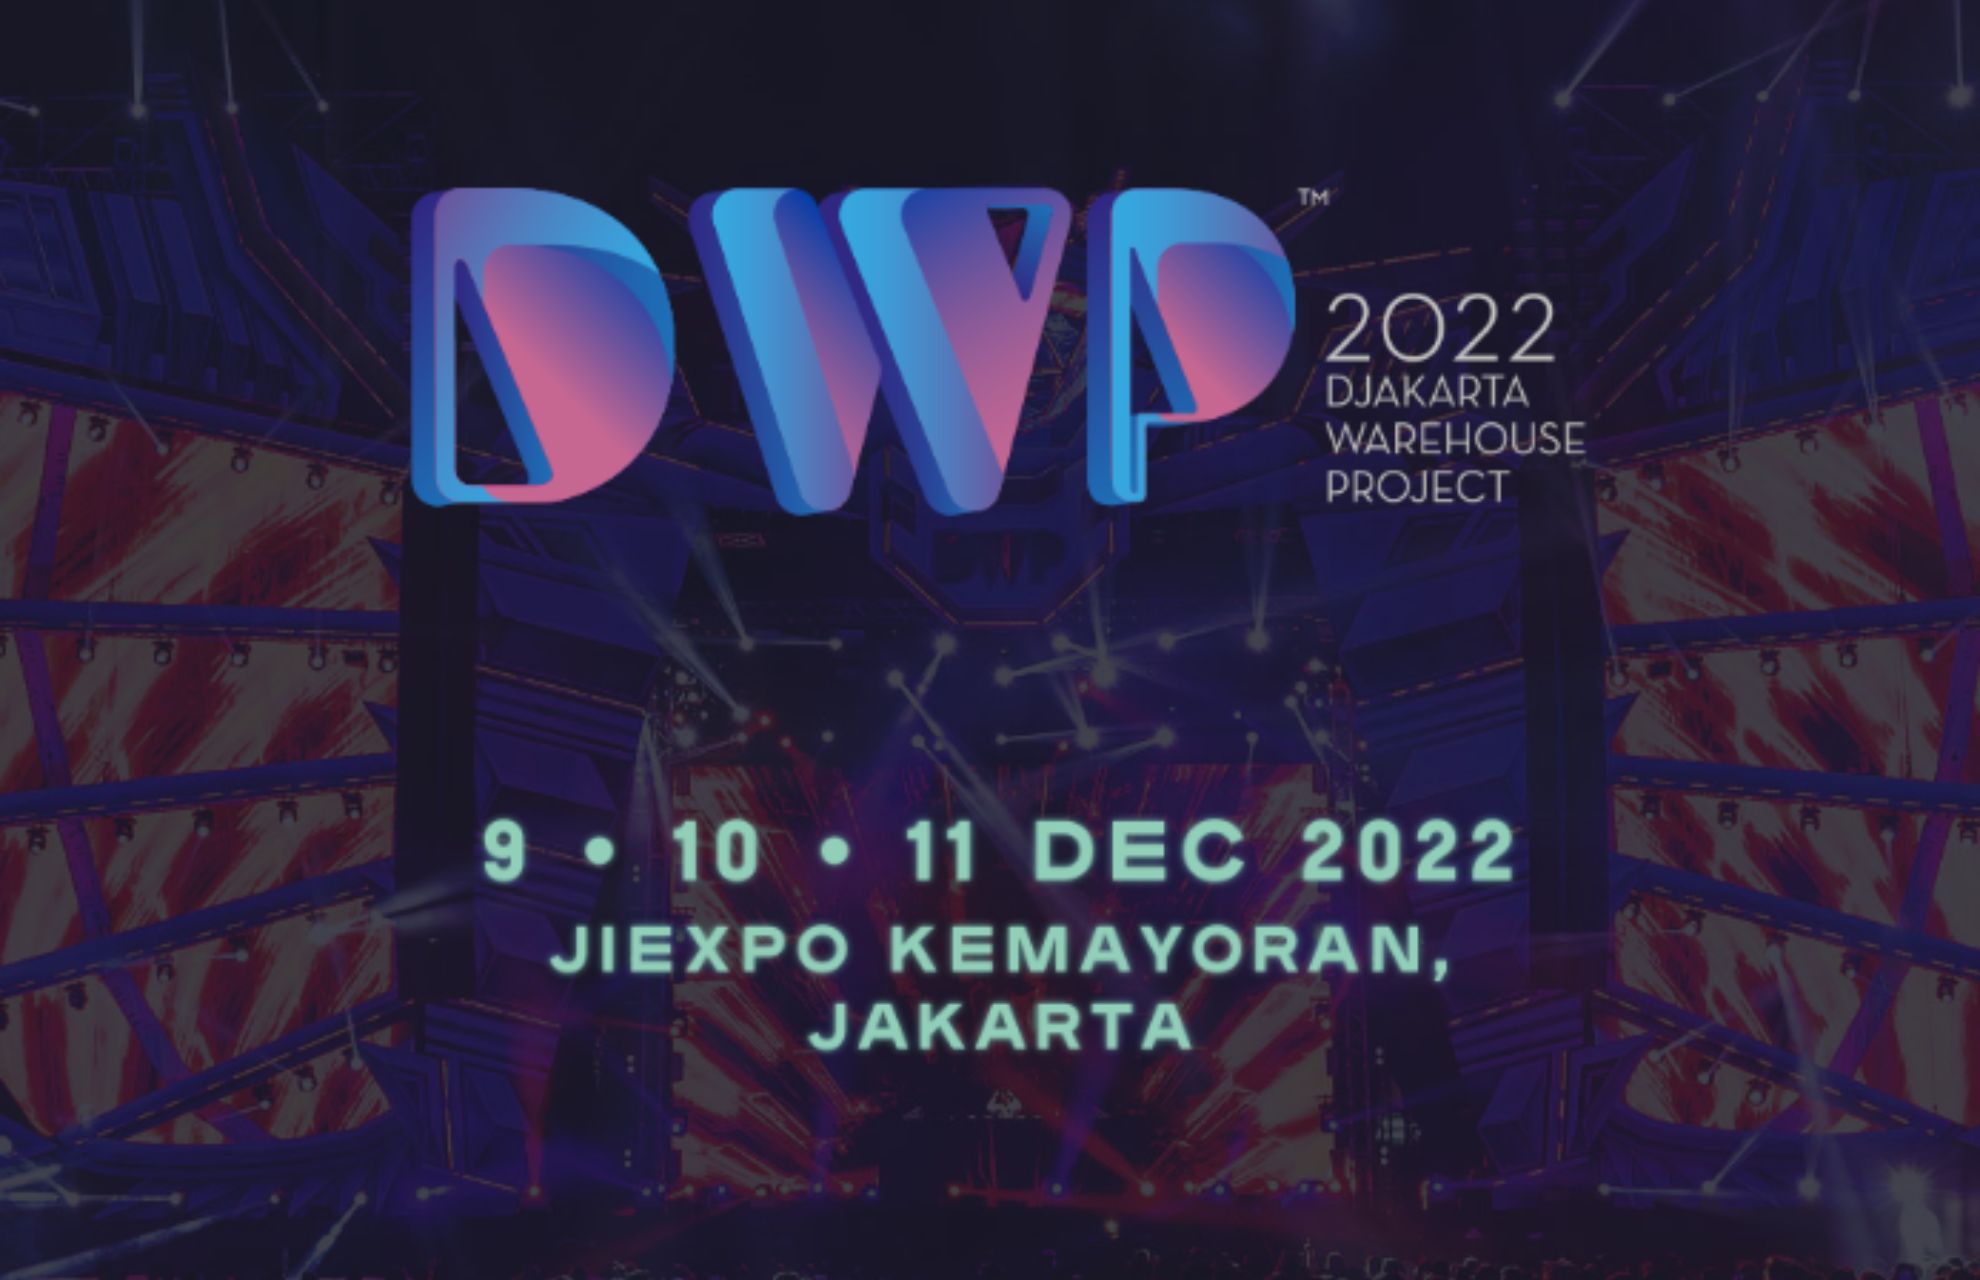 Djakarta Warehouse Project 2022 Kembali Digelar, Berikut Jadwal, Harga